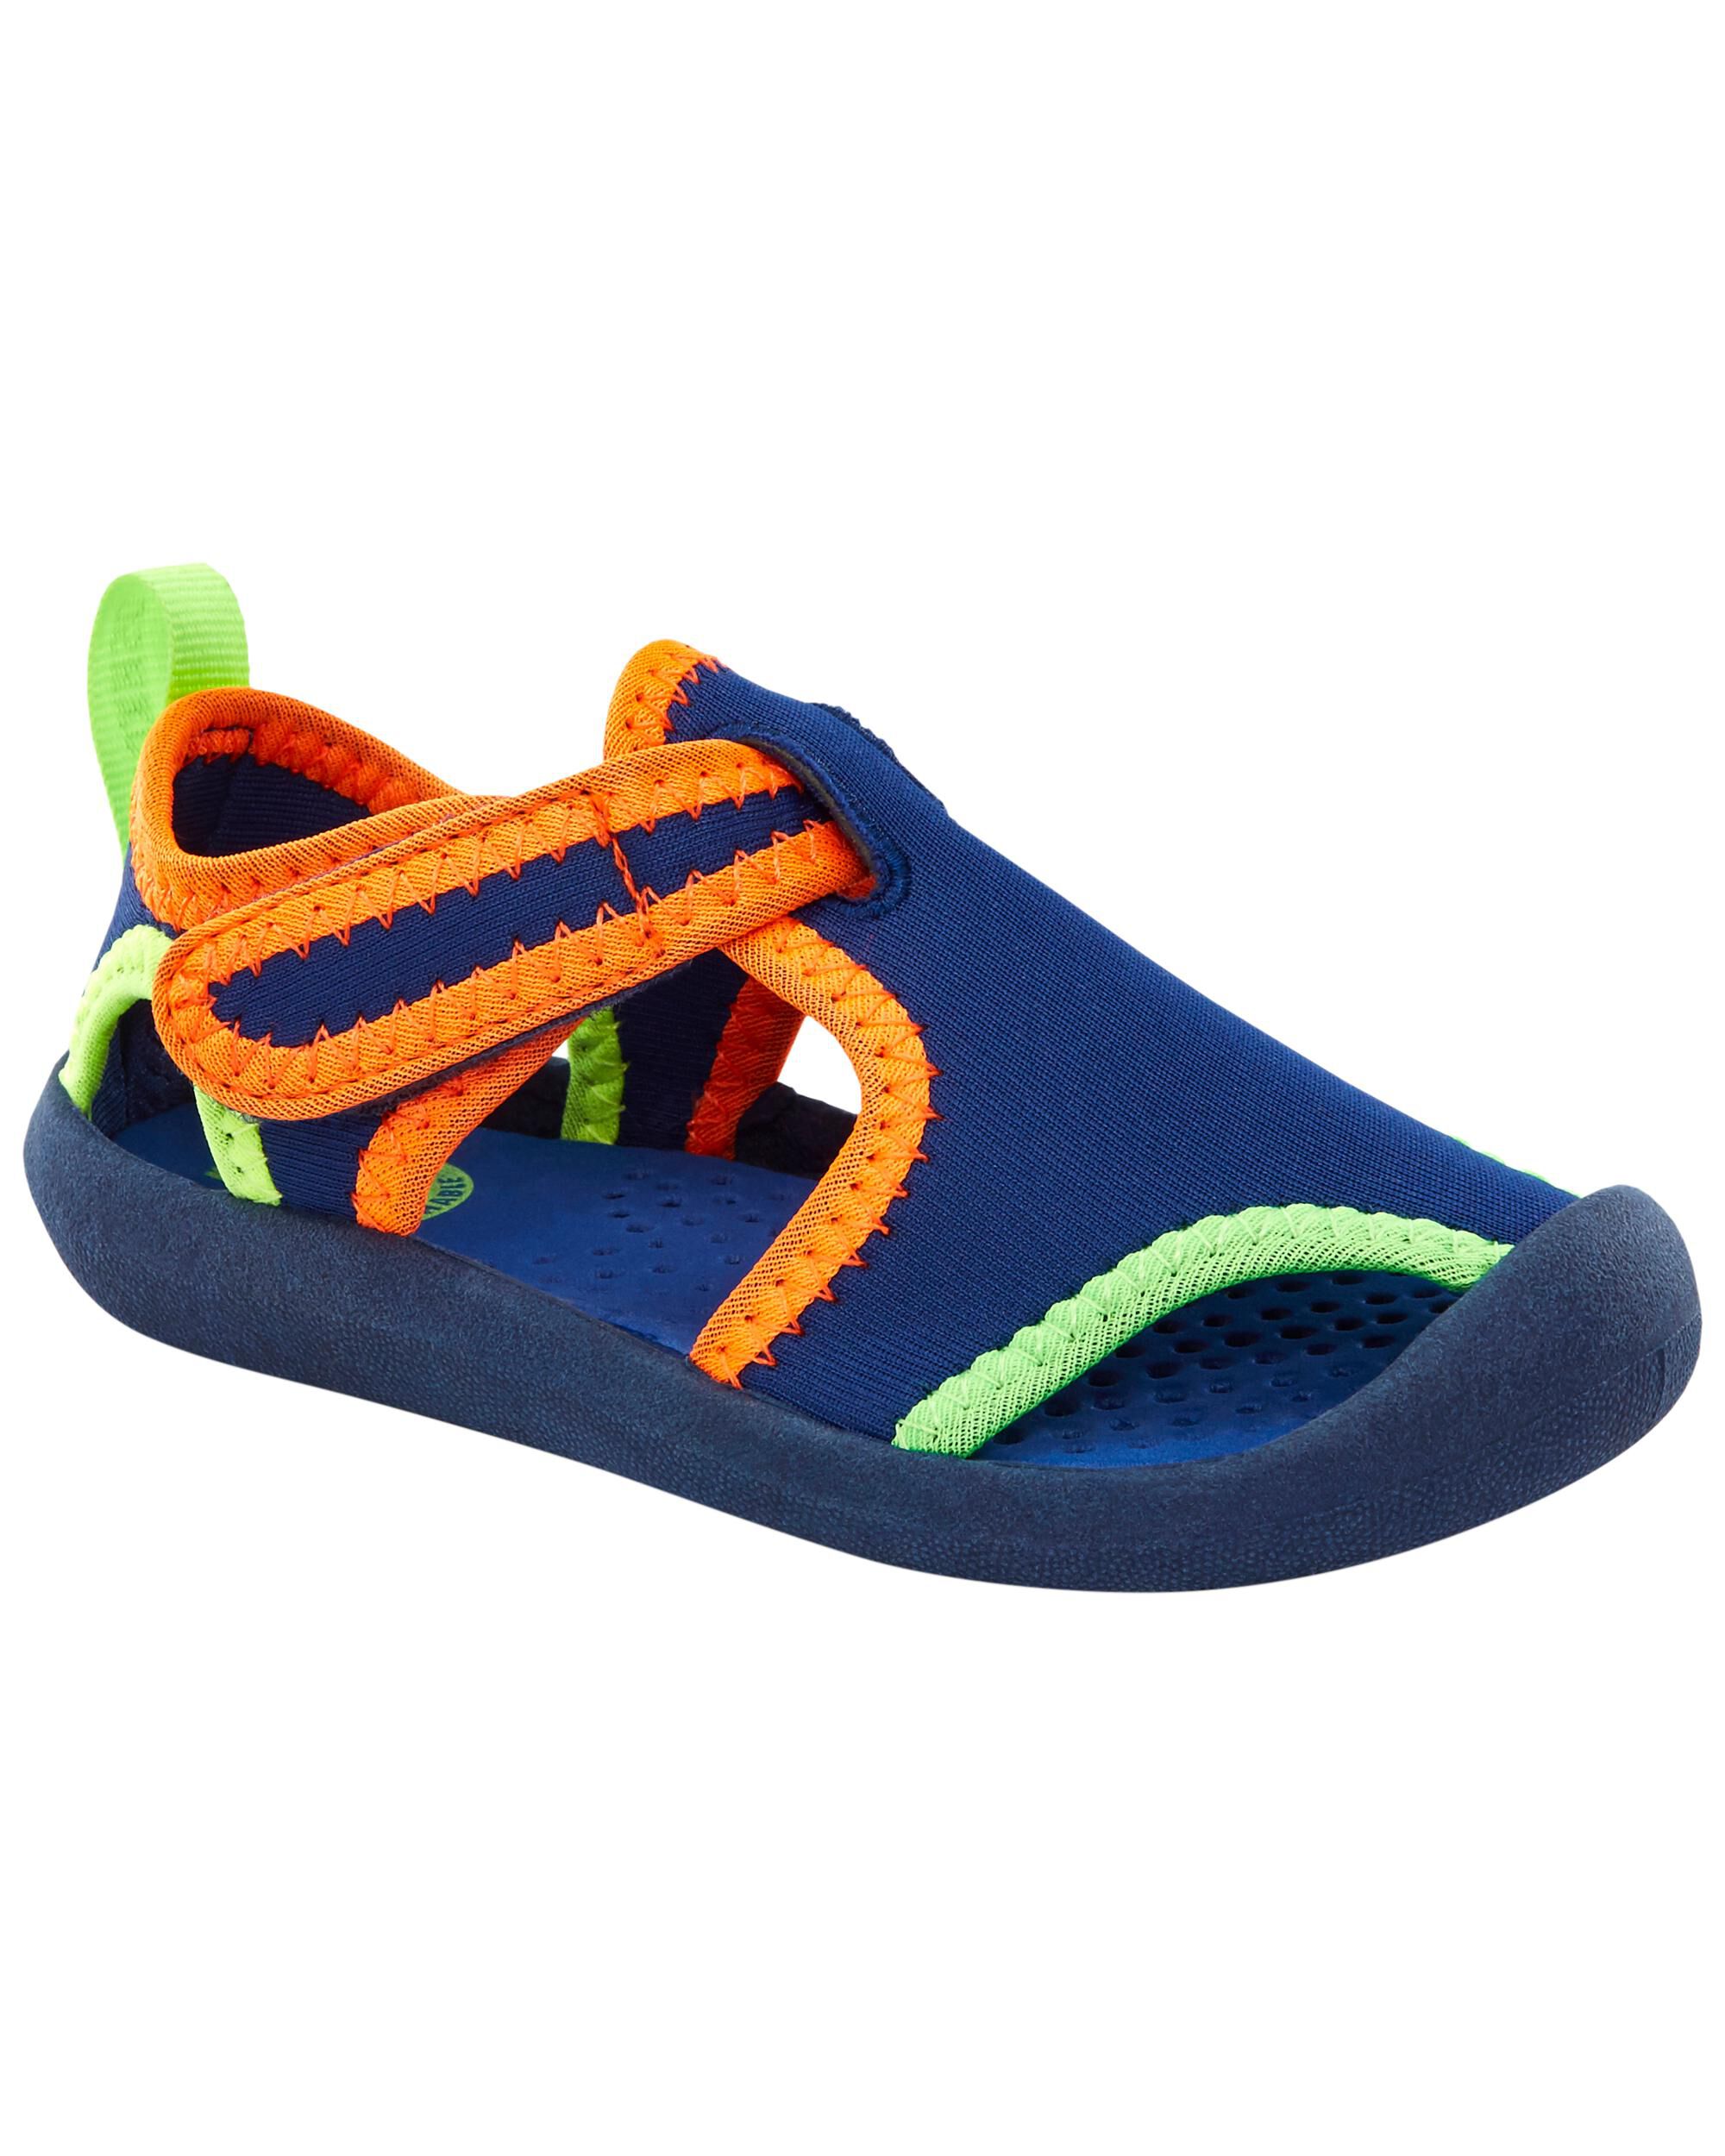 OshKosh BGosh Unisex-Child Aquatic Water Shoe Sport Sandal 